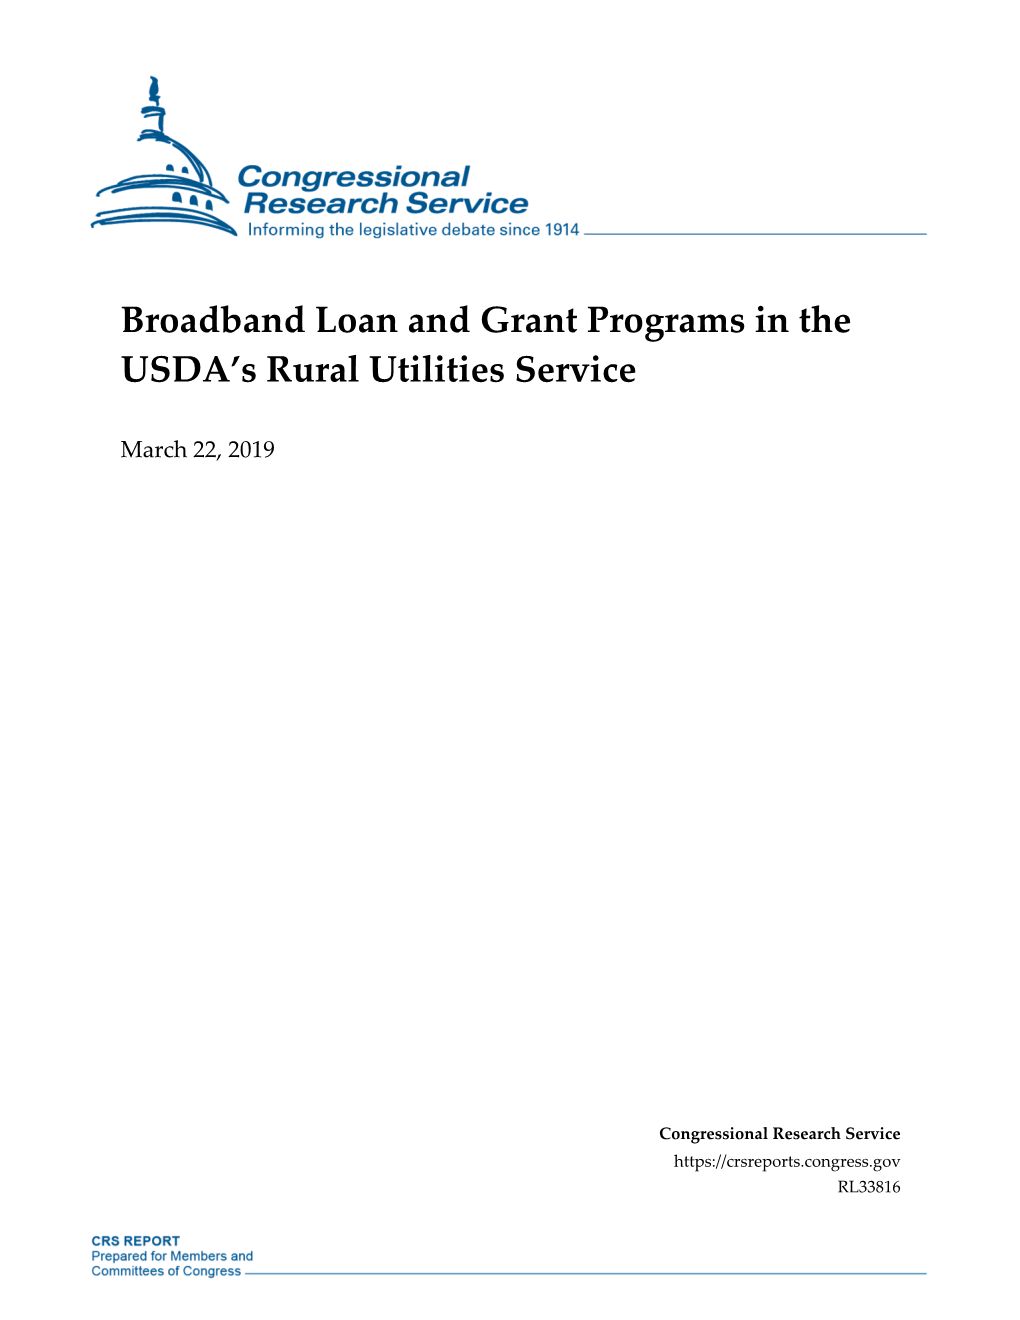 Broadband Loan and Grant Programs in the USDA’S Rural Utilities Service